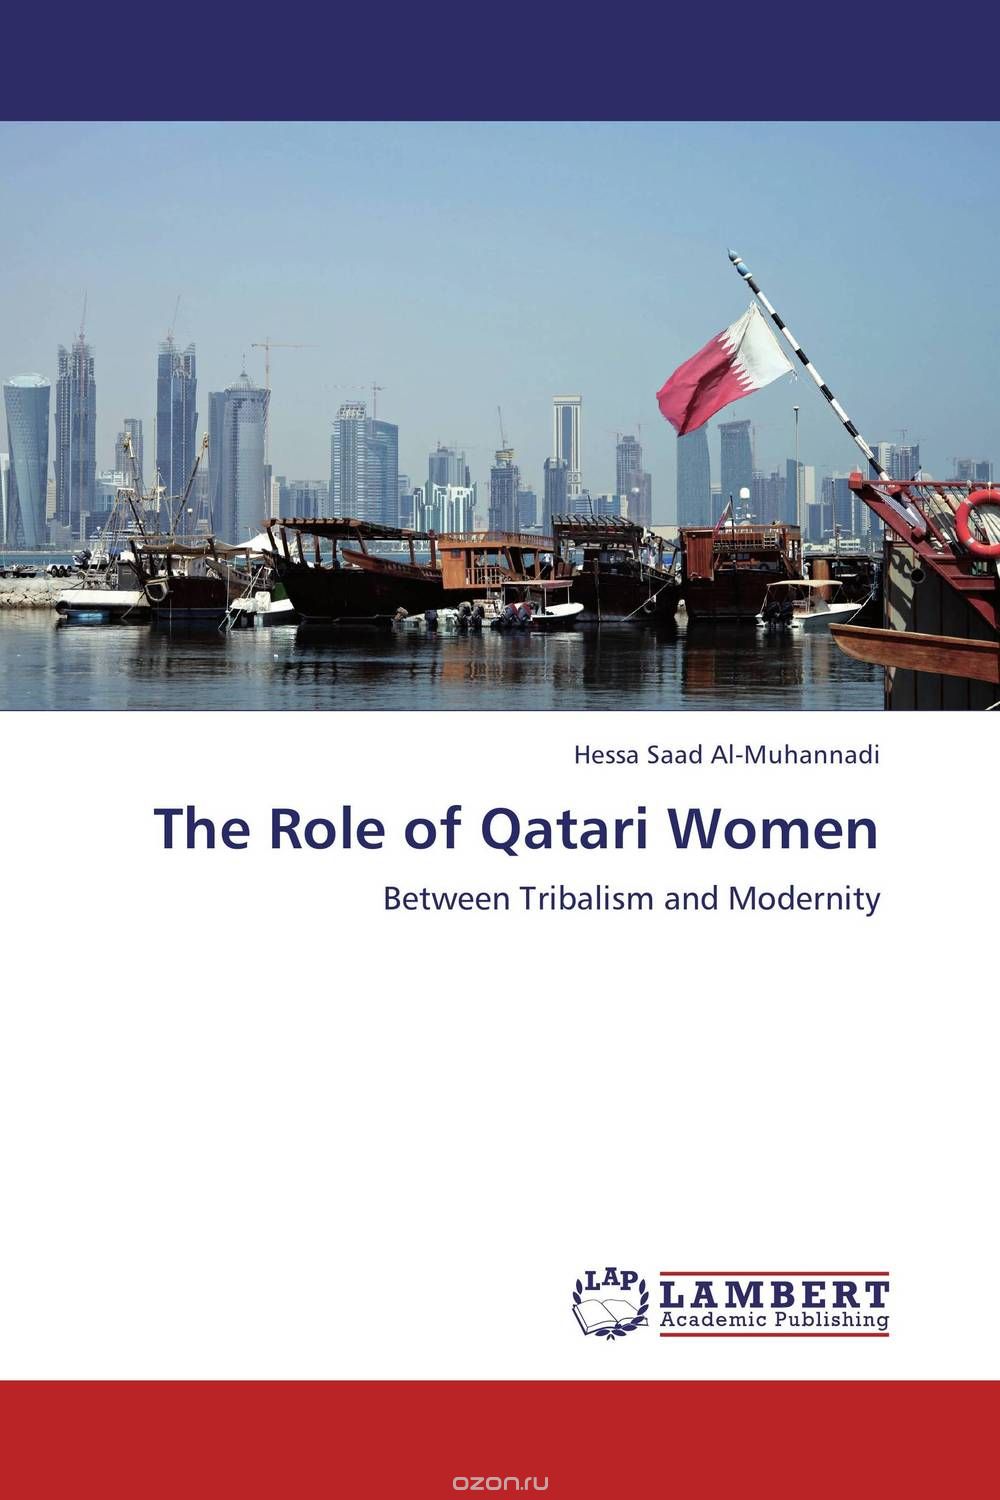 The Role of Qatari Women